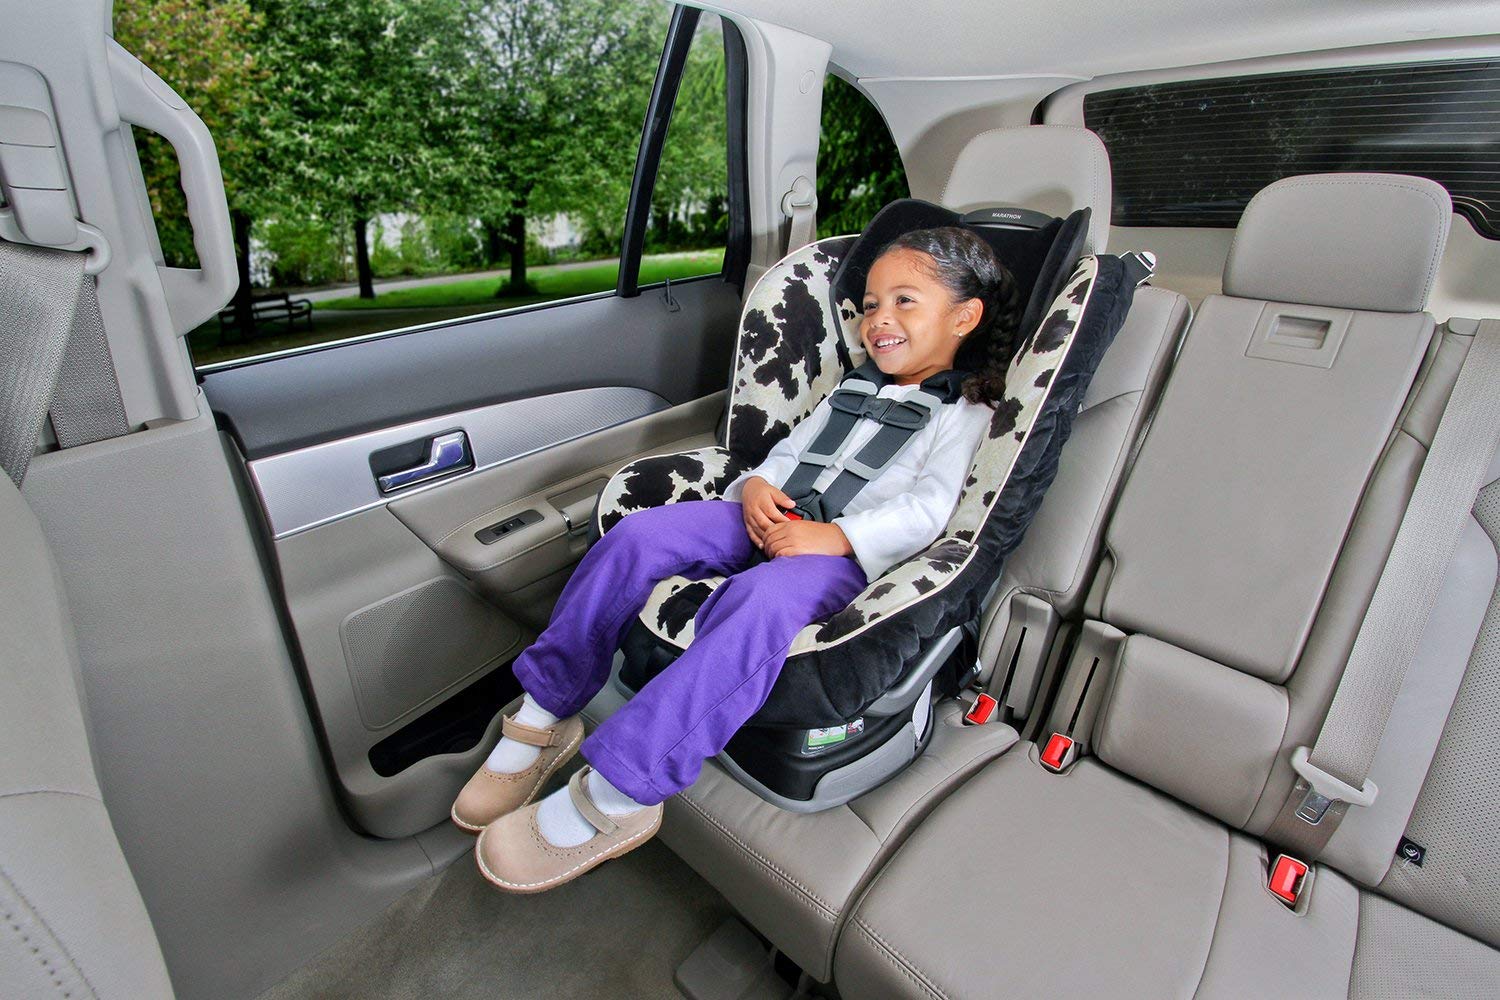 Seats left. Baby car Seat. Автокресло для 7 лет. Автокресло для ребенка 7 лет. Ребенок в автокресле.